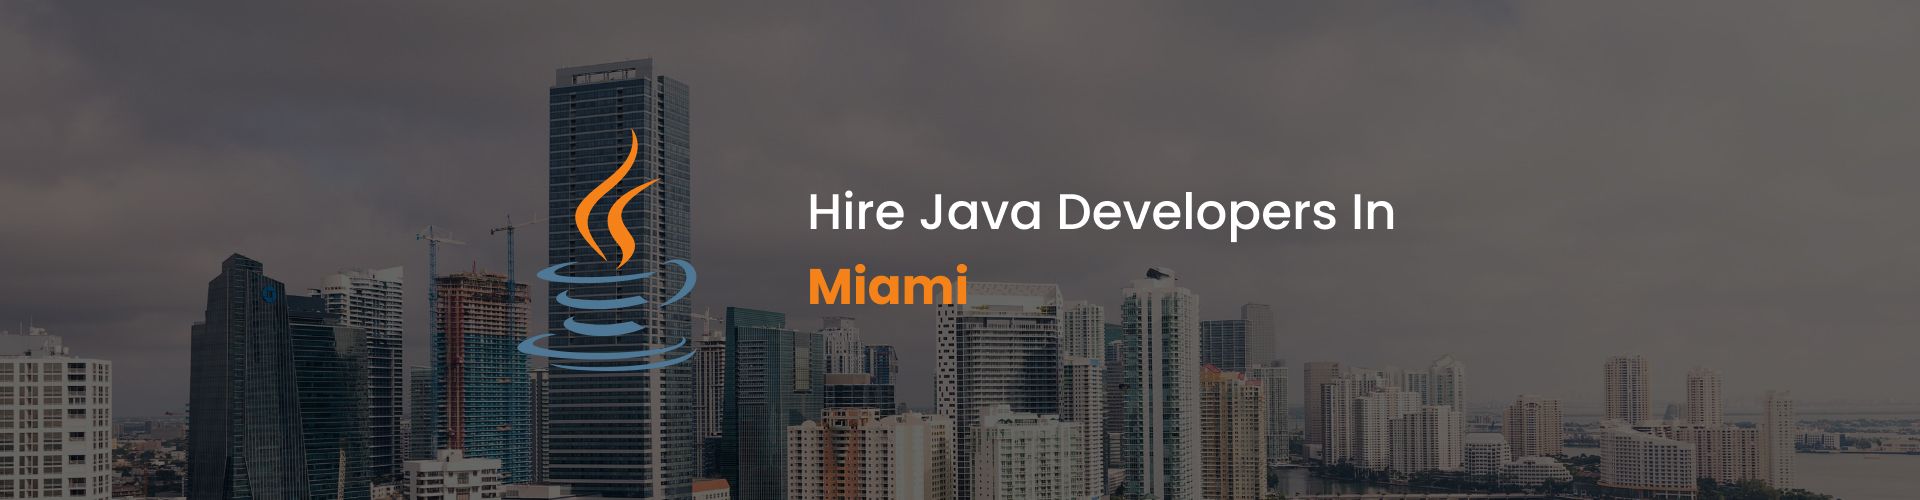 hire java developers in miami